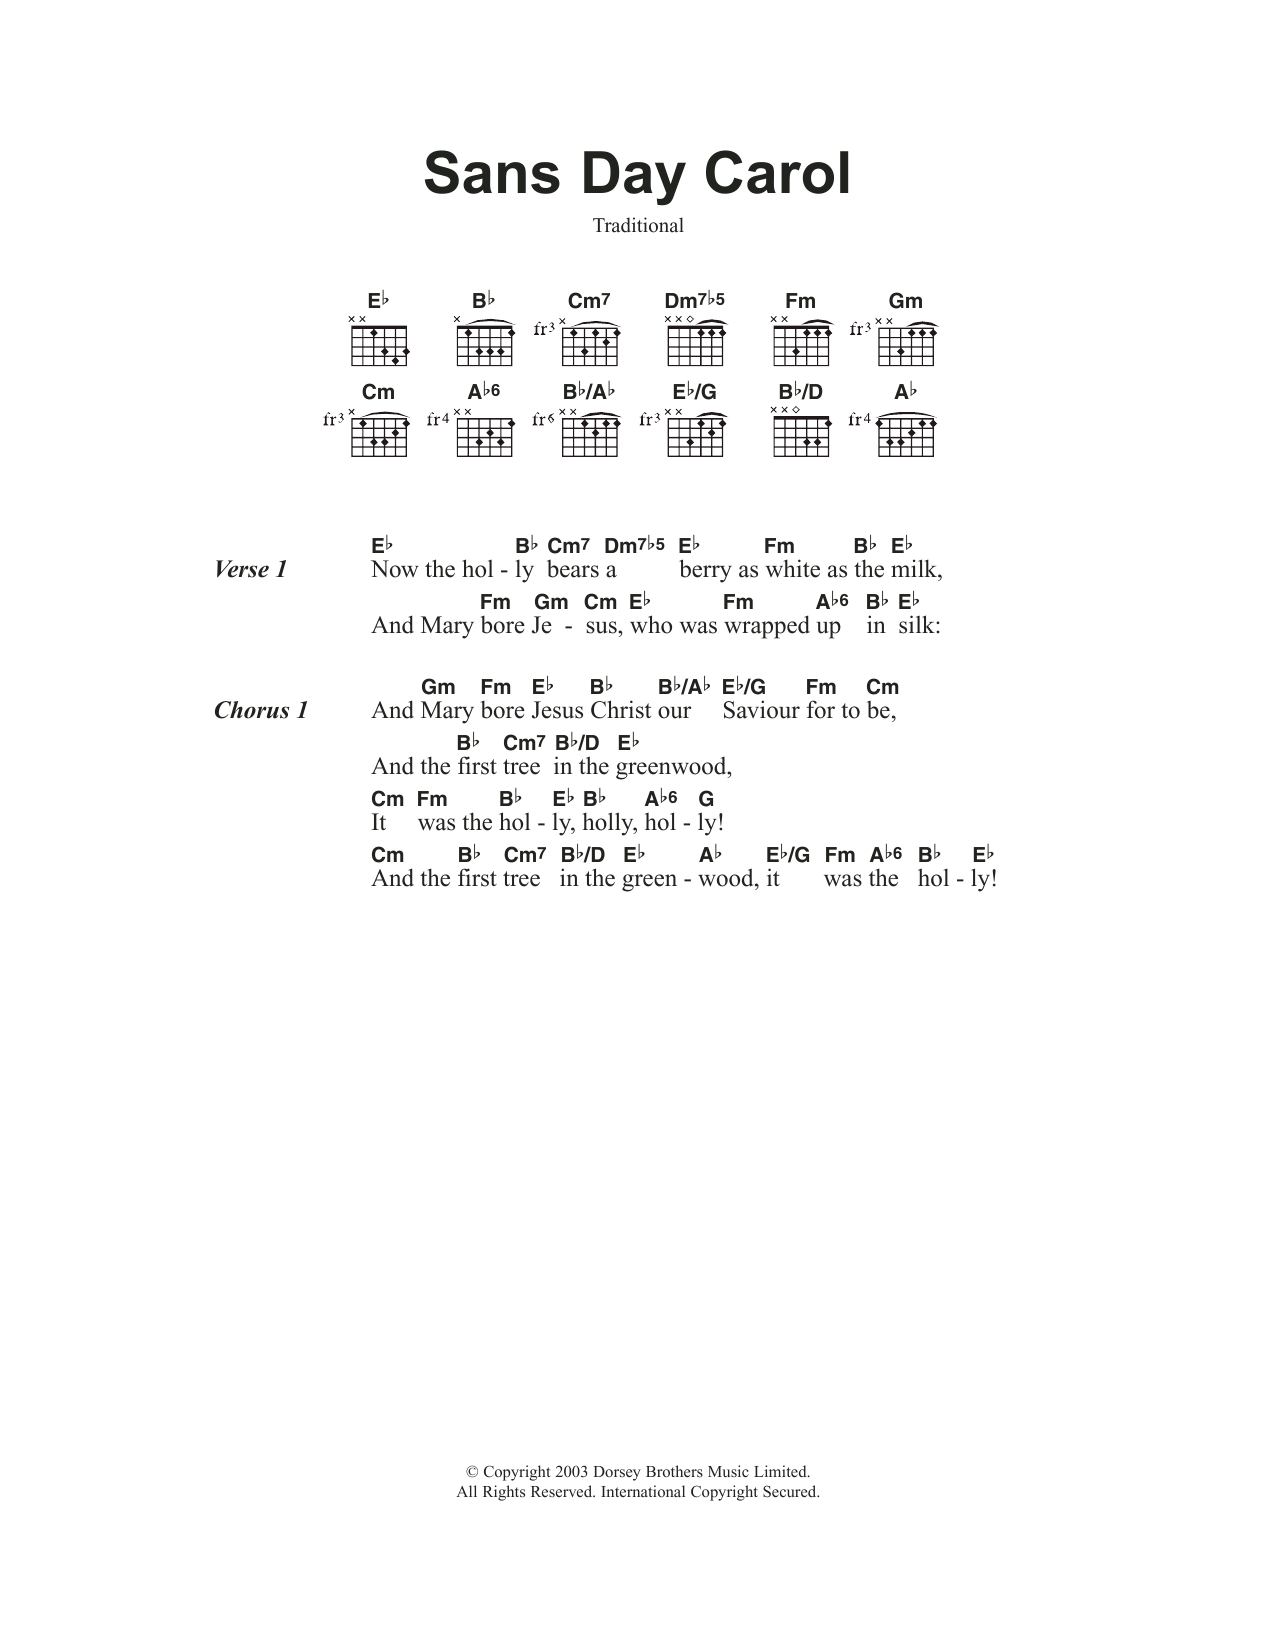 Traditional Carol Sans Day Carol sheet music notes and chords arranged for Guitar Chords/Lyrics